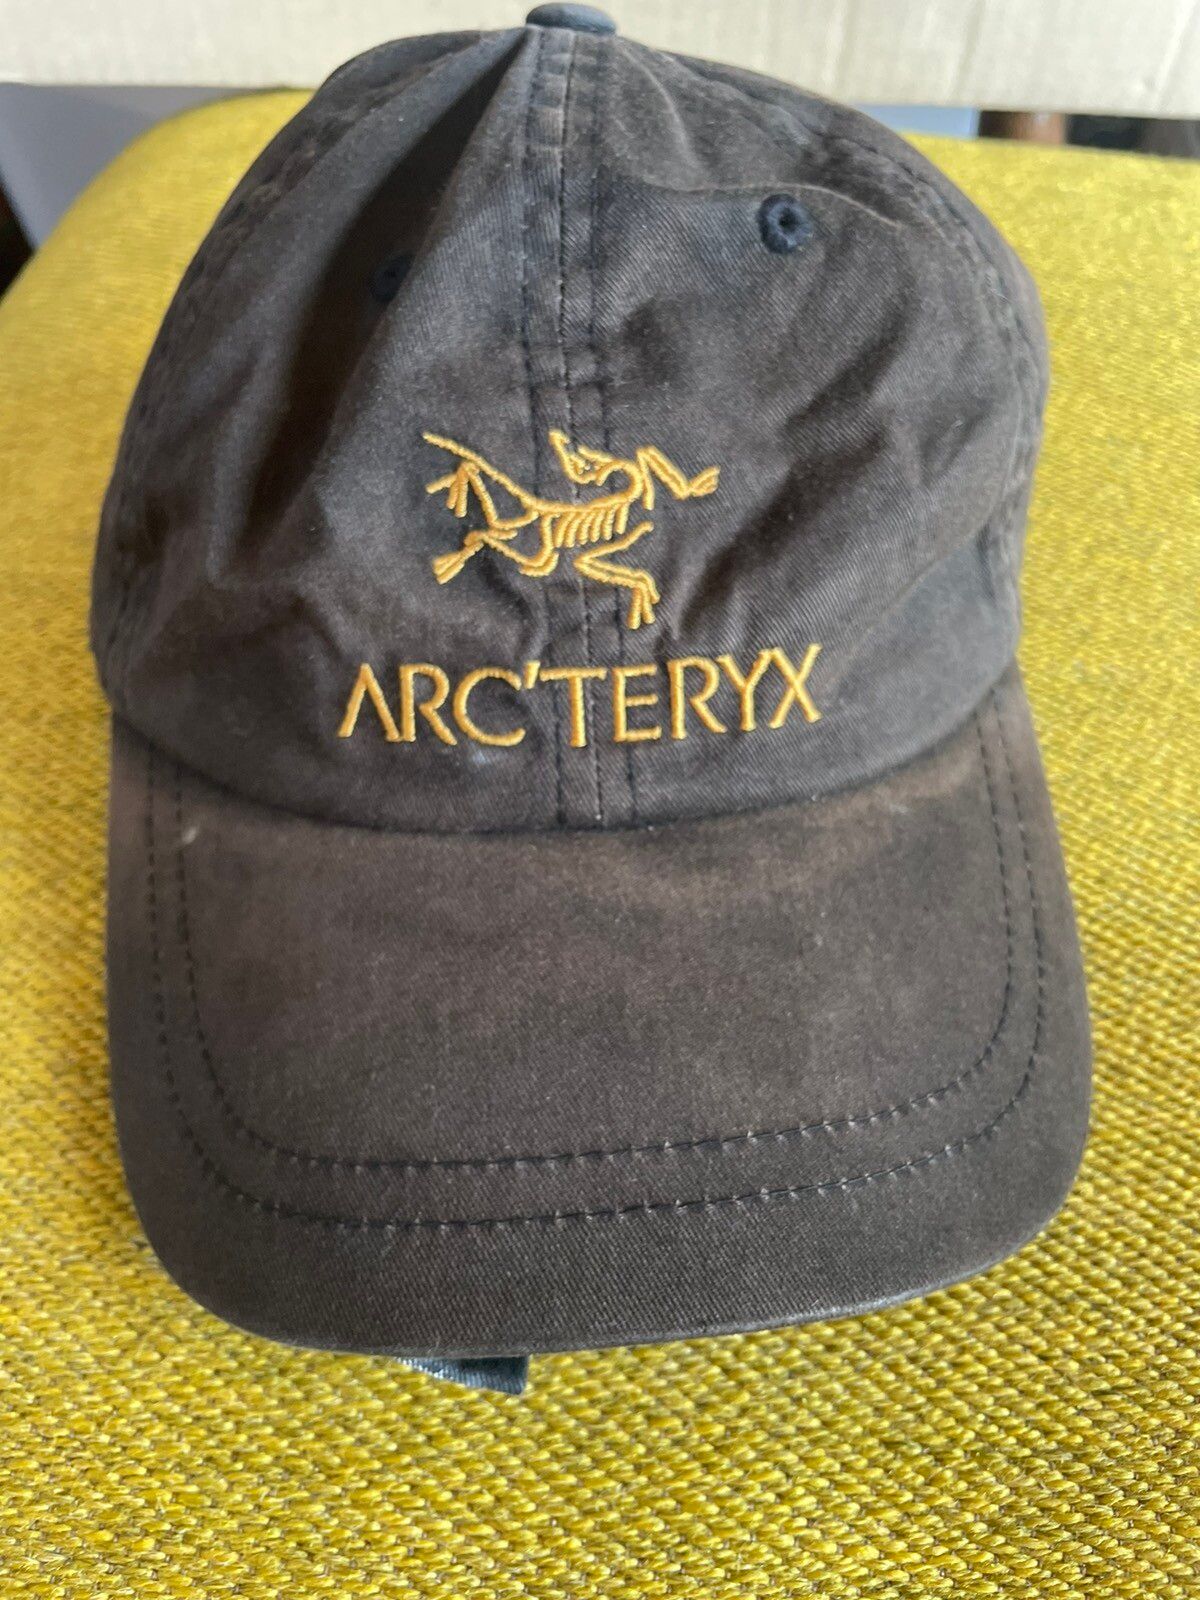 Arc'Teryx Arc'teryx x Palace logo baseball cap orange black | Grailed